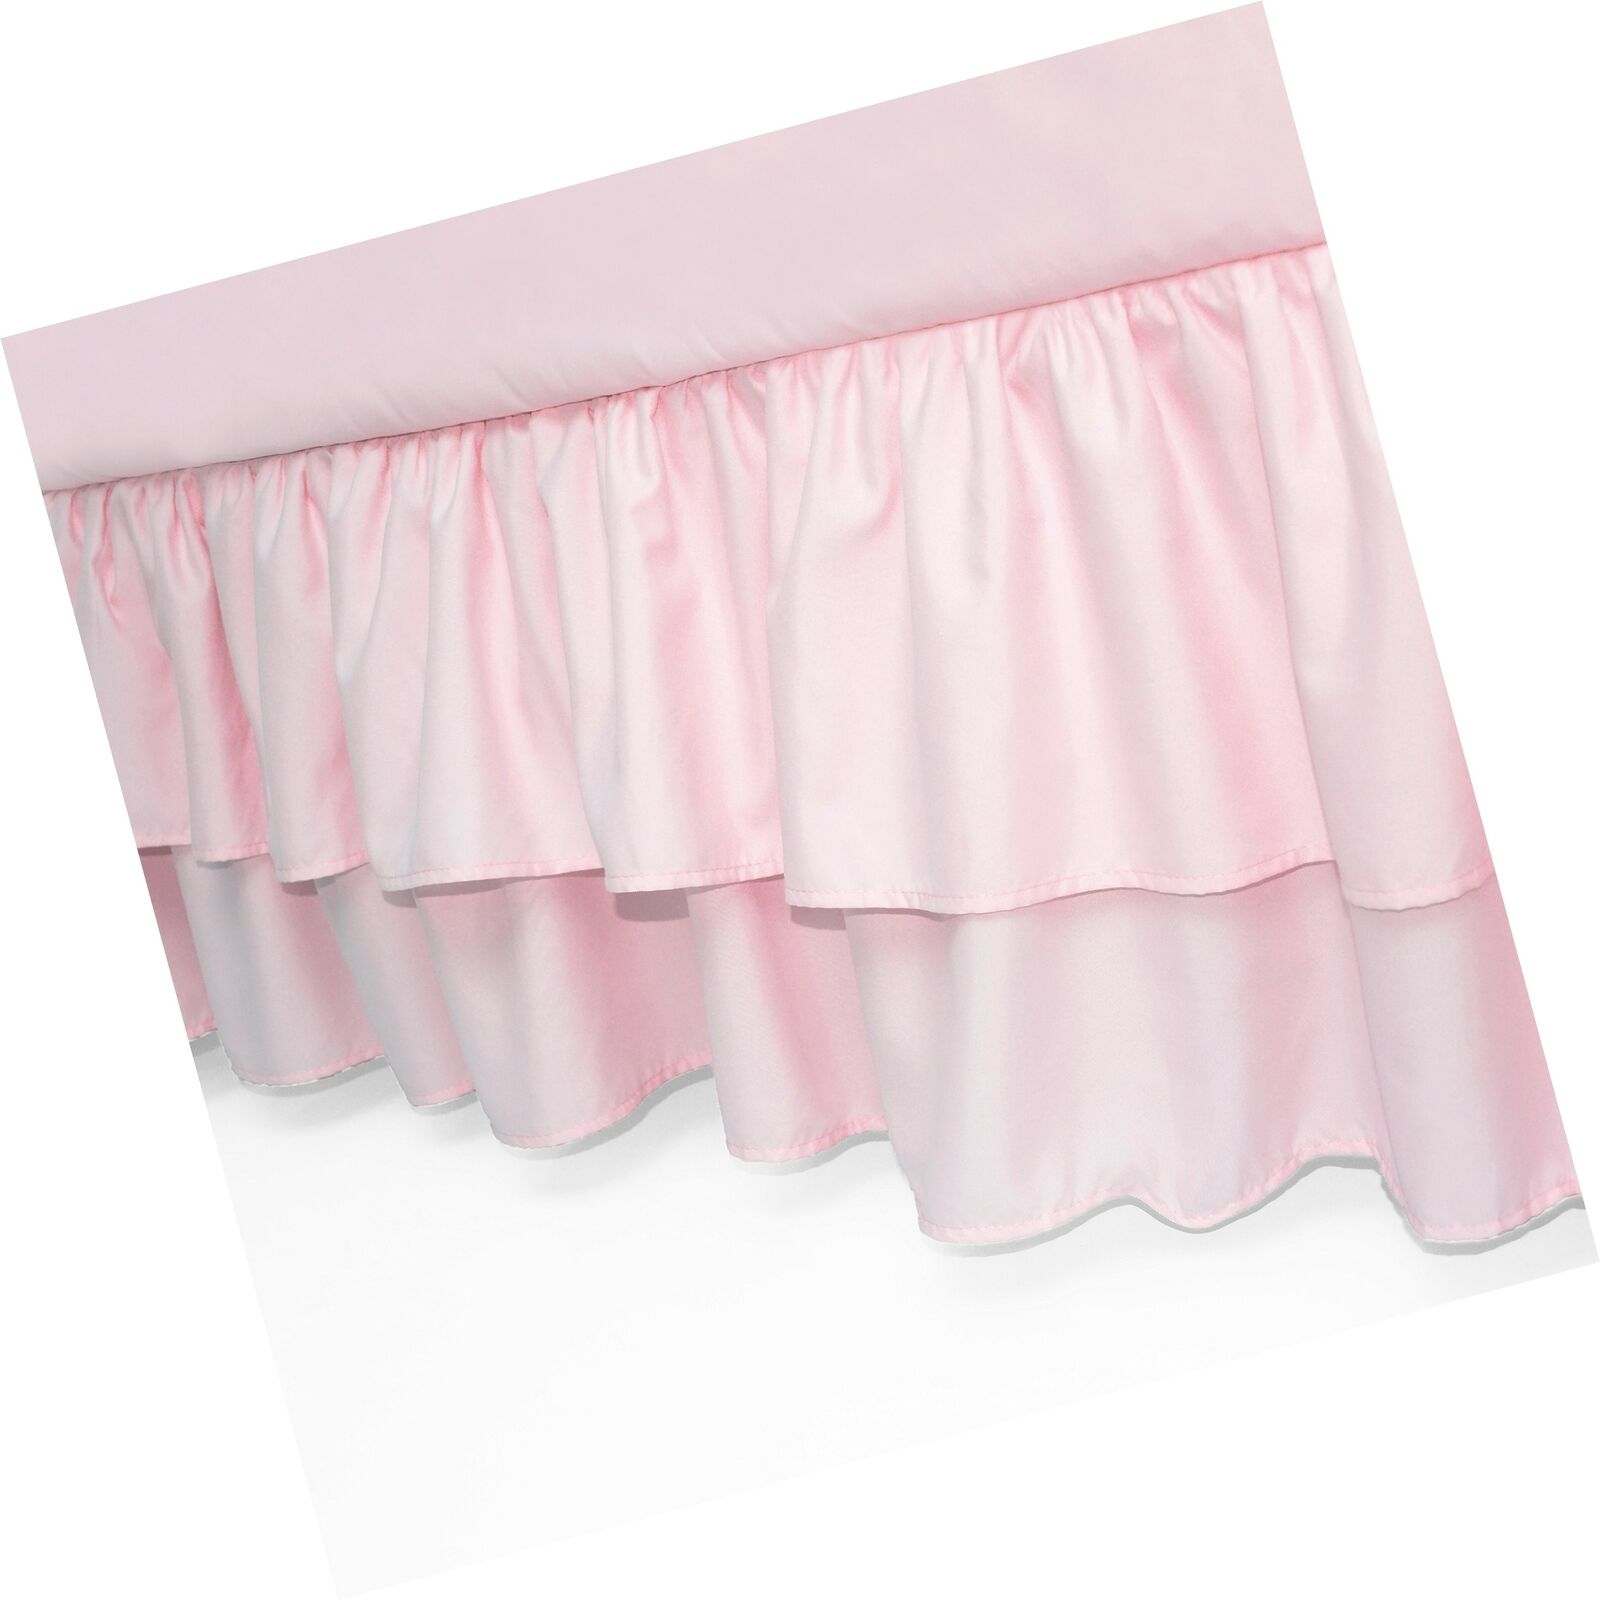 American Baby Company Double Layer Ruffled Crib Skirt, Blush Pink, For Girls